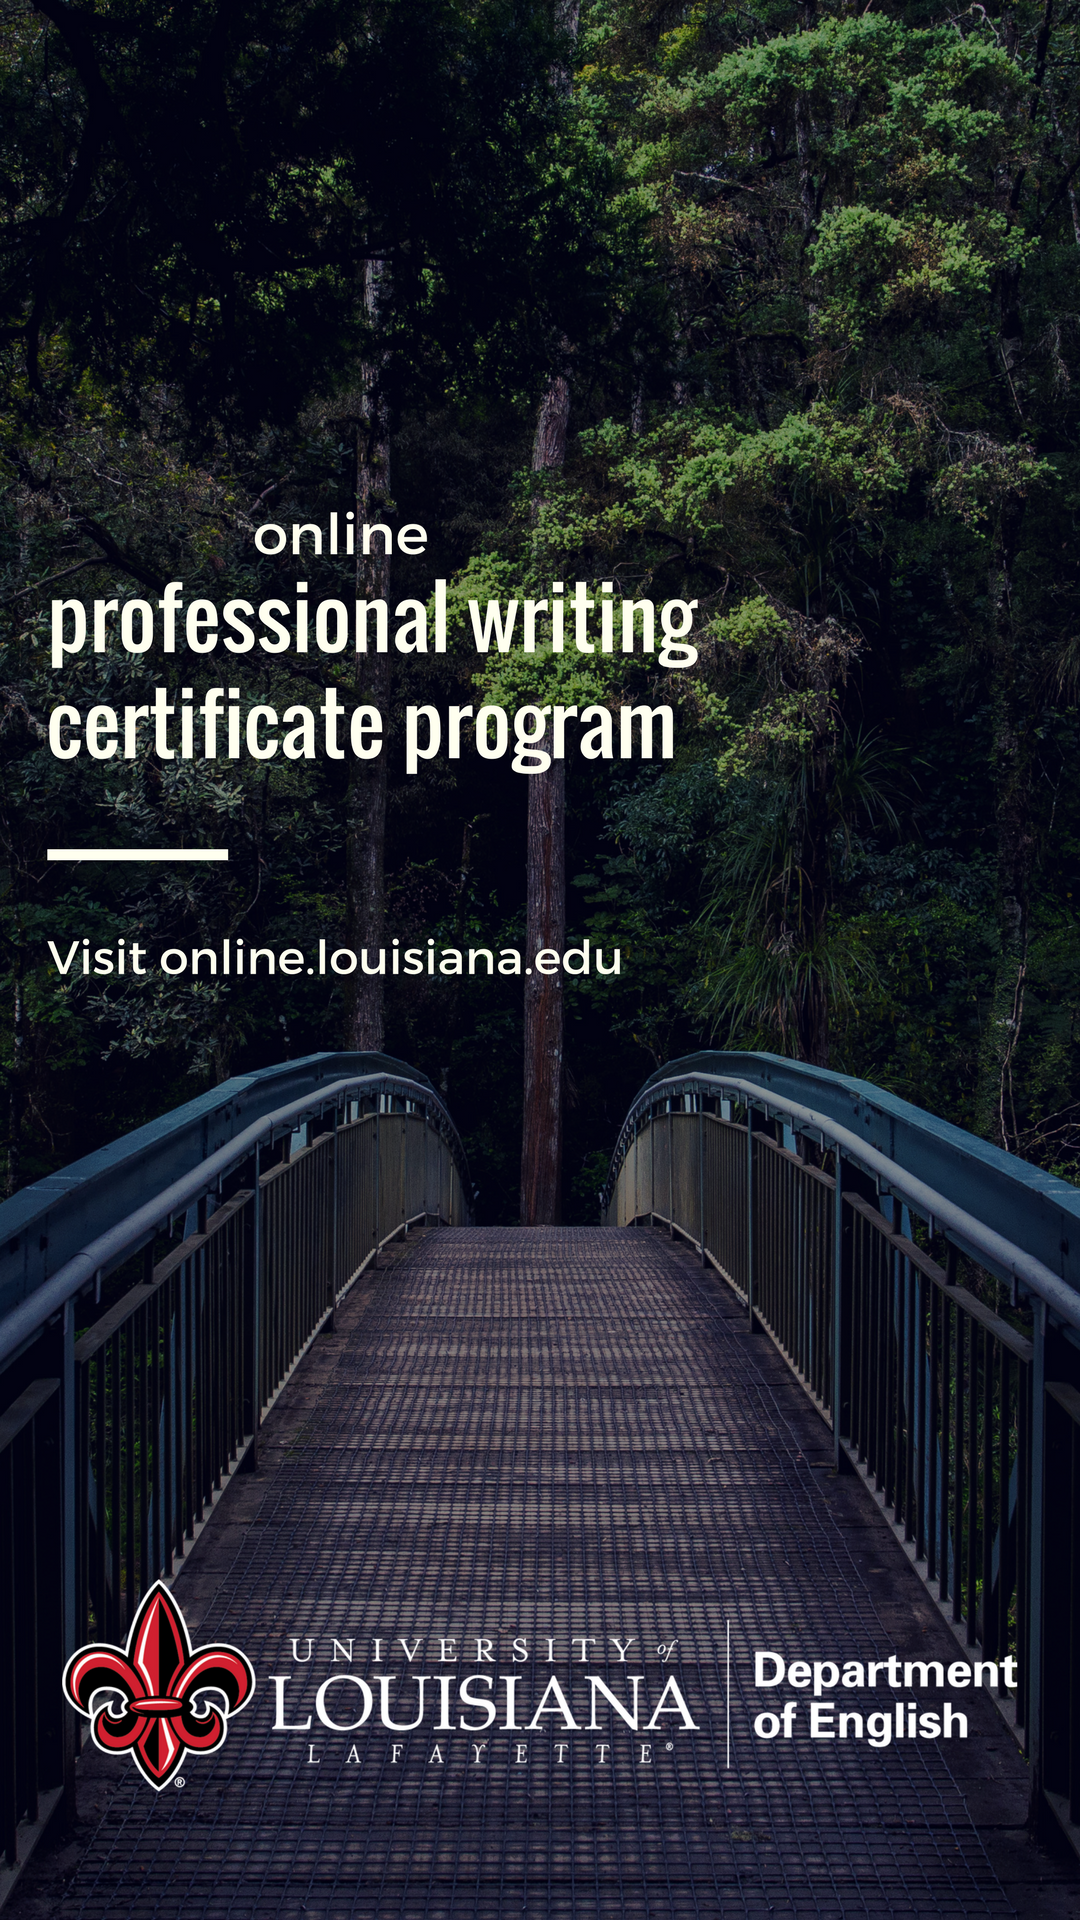 UL English Department Professional Writing Certificate